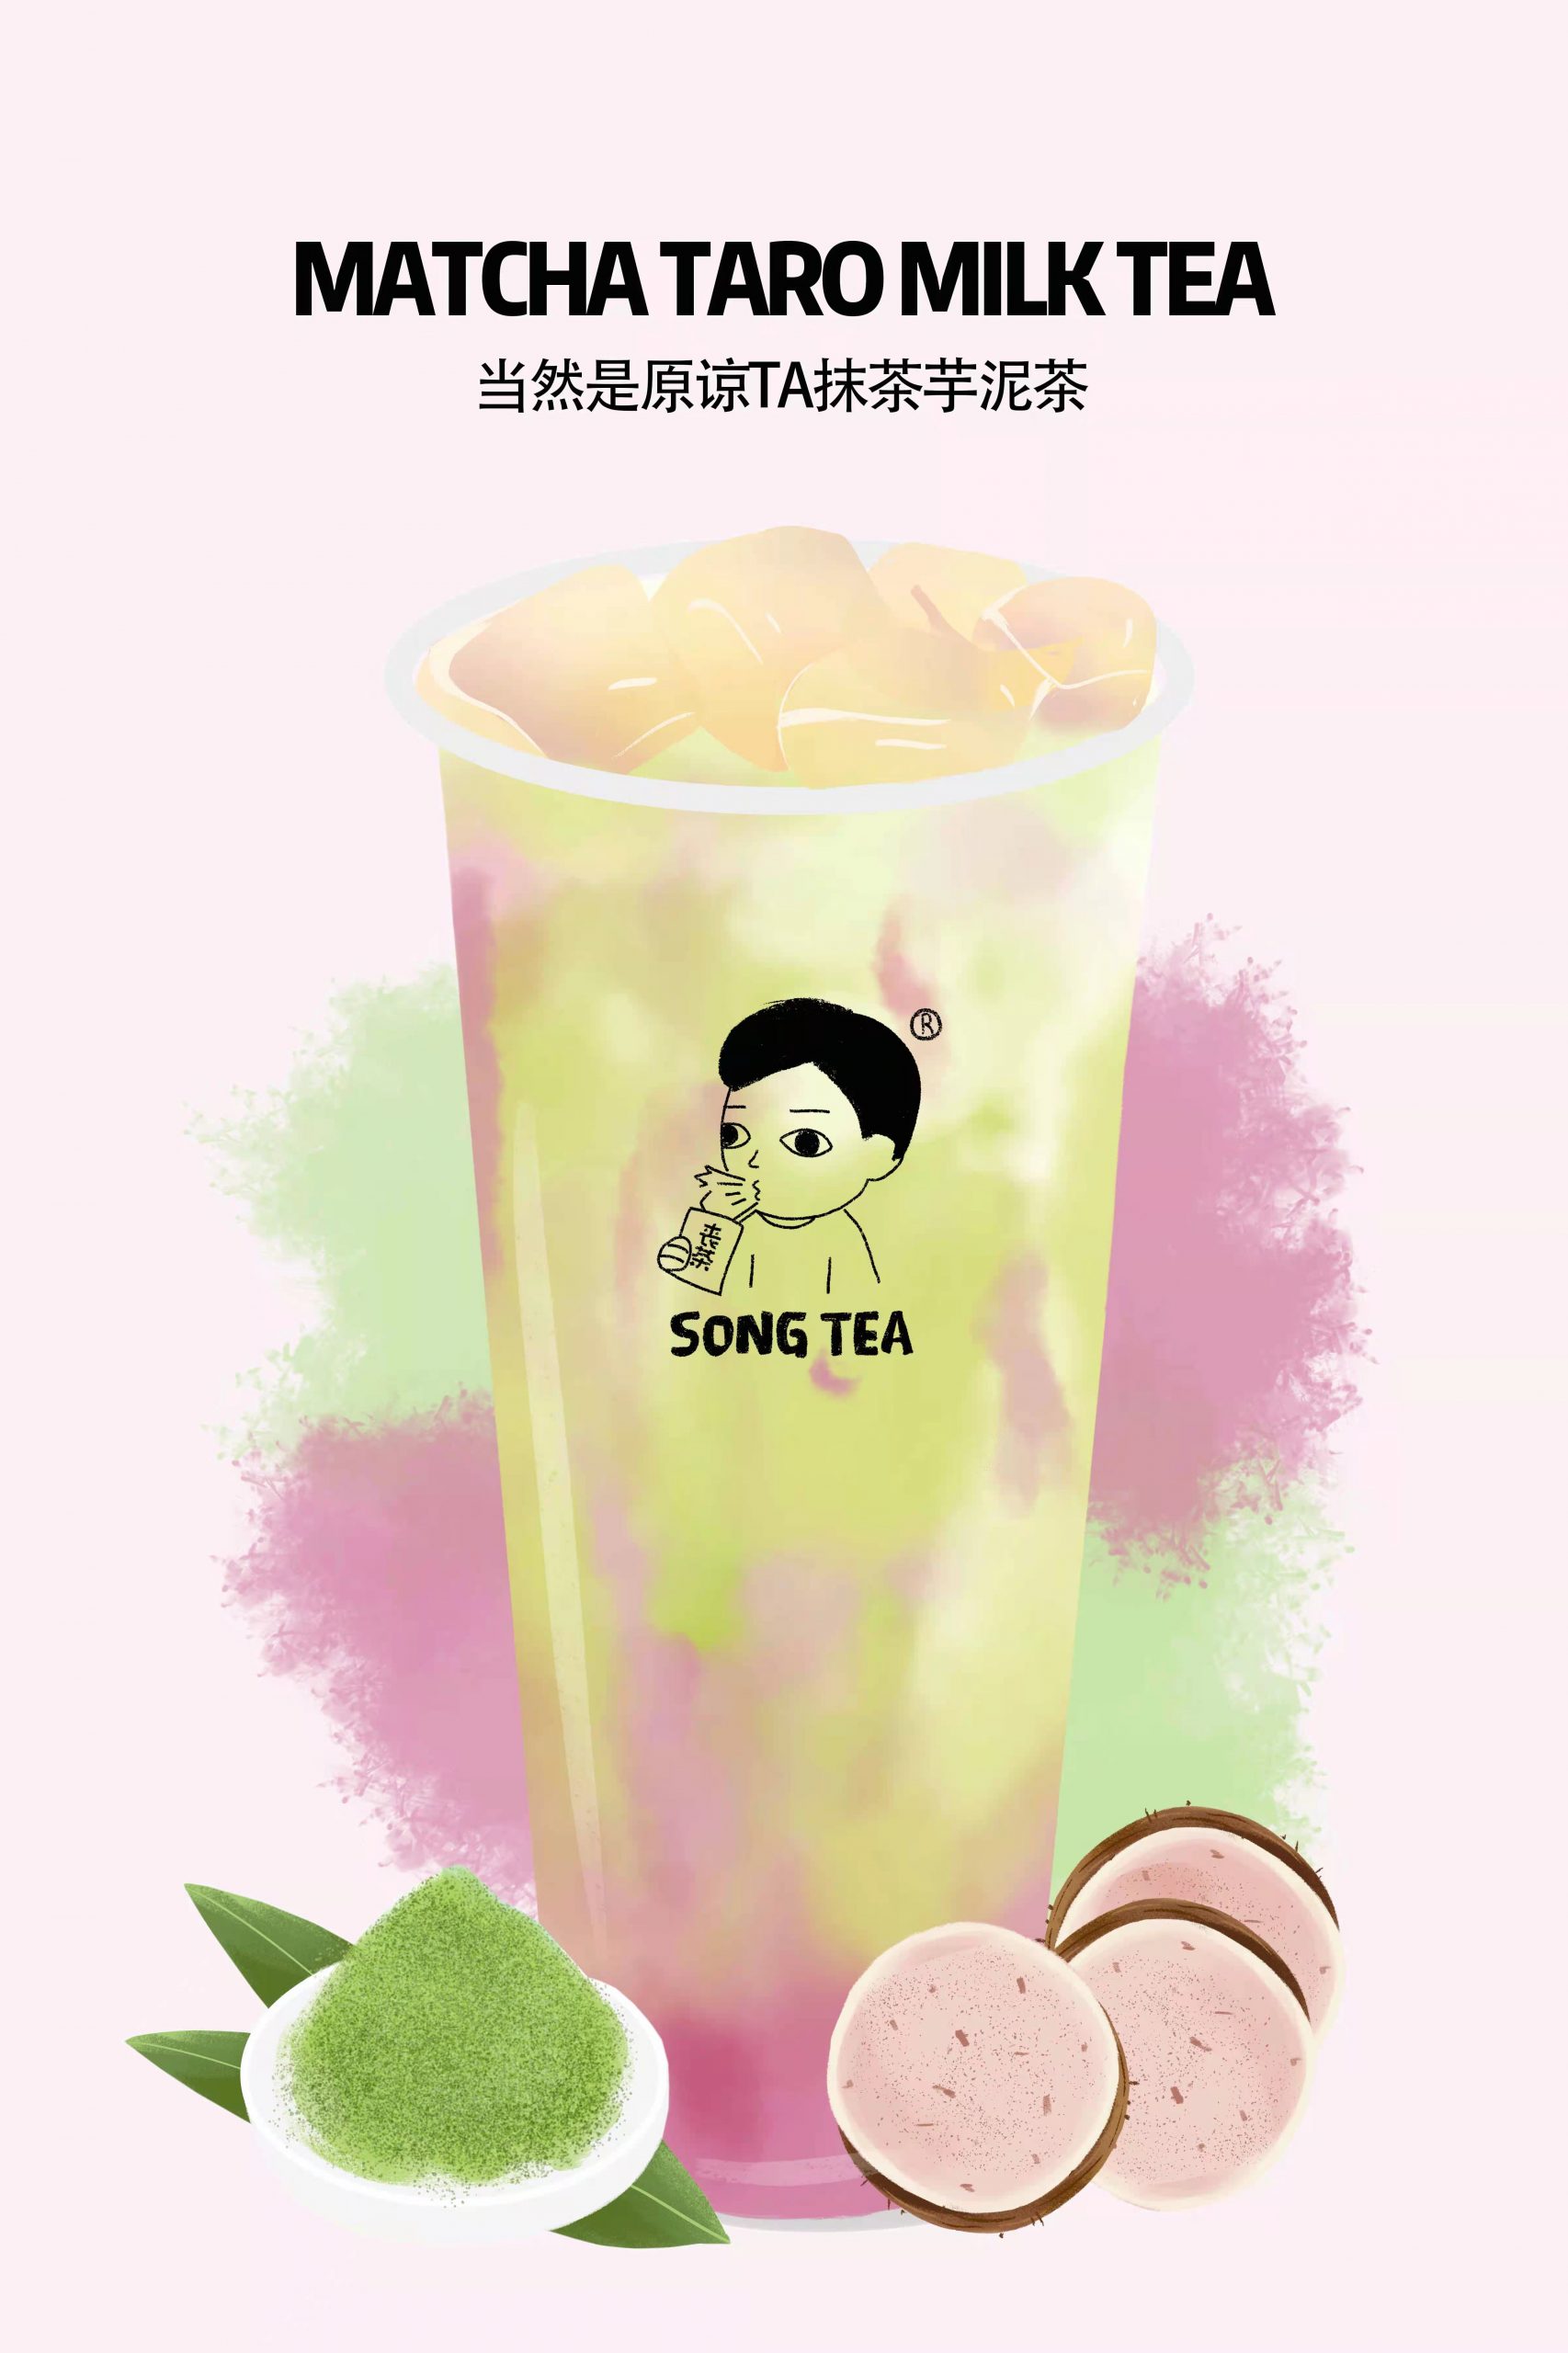 Matcha Taro Milk Tea